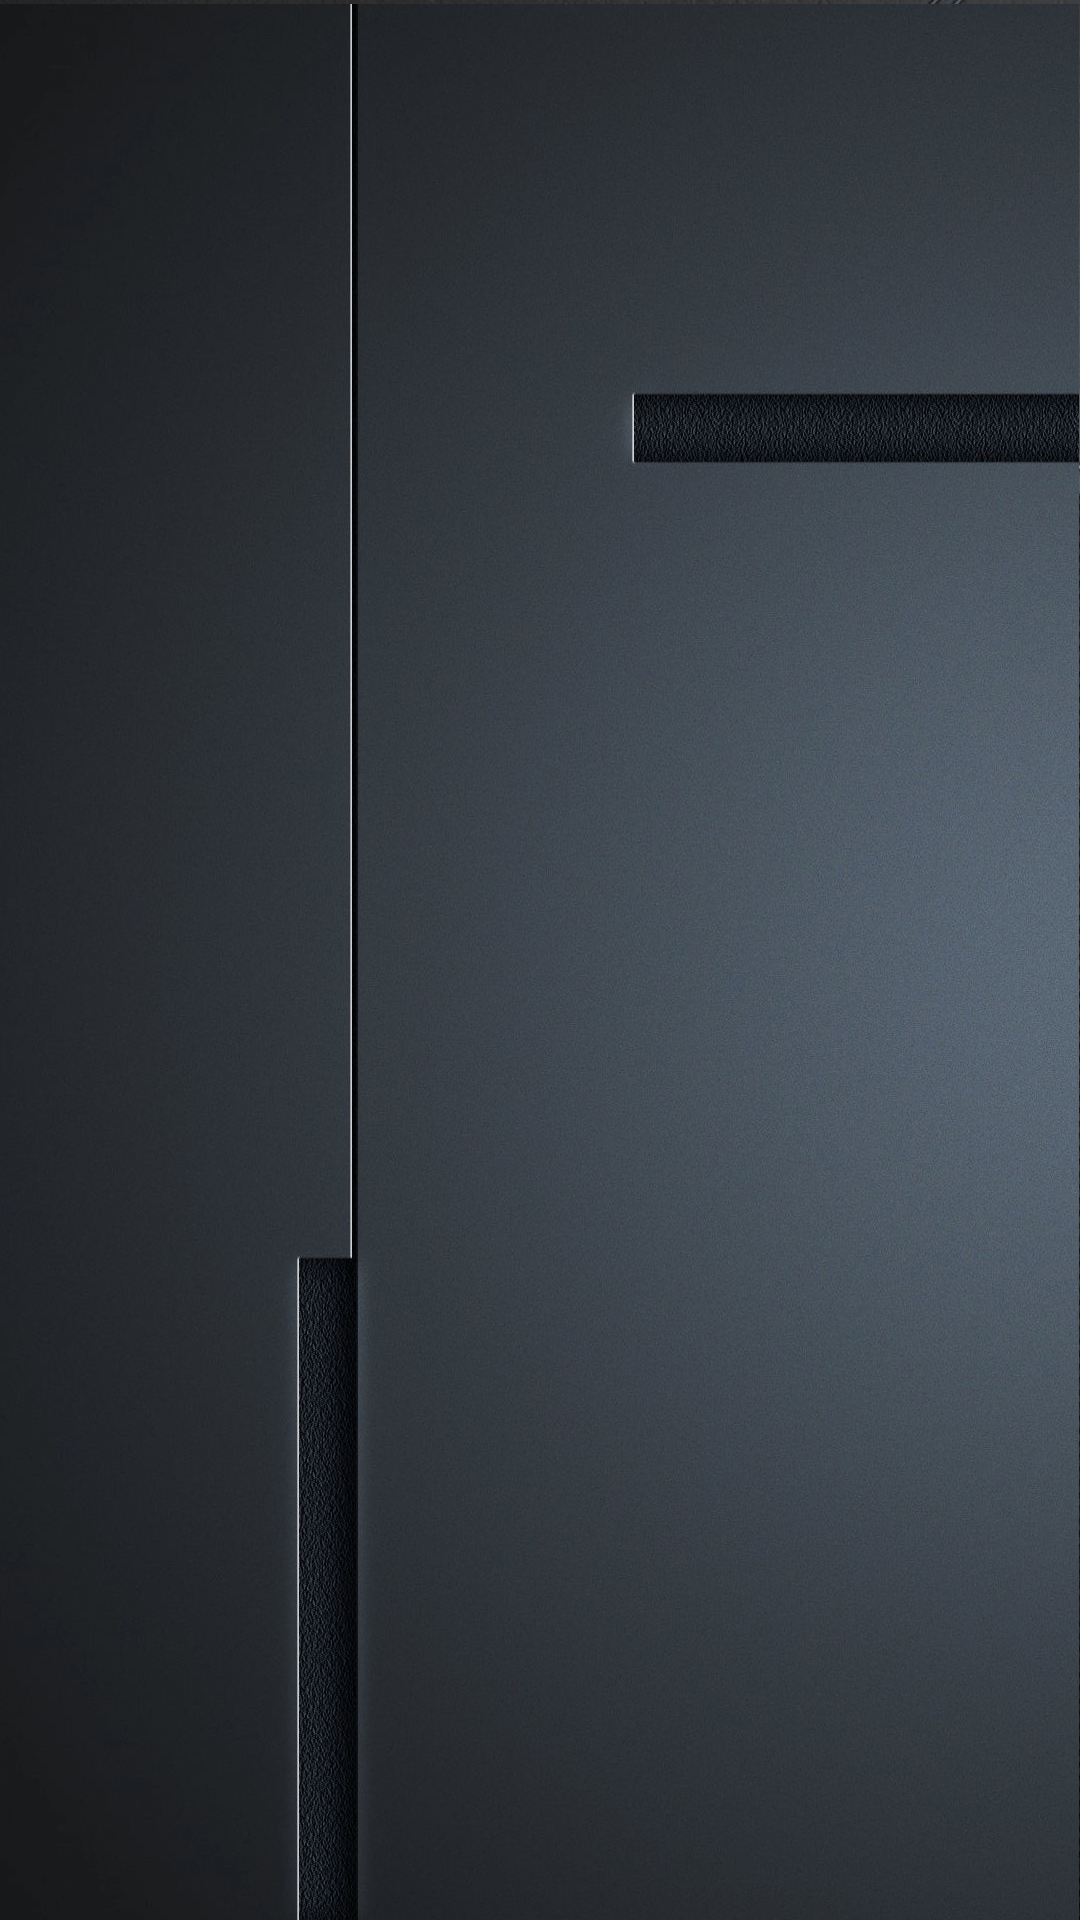 Dark Metal Steel Clean Android Wallpaper free download